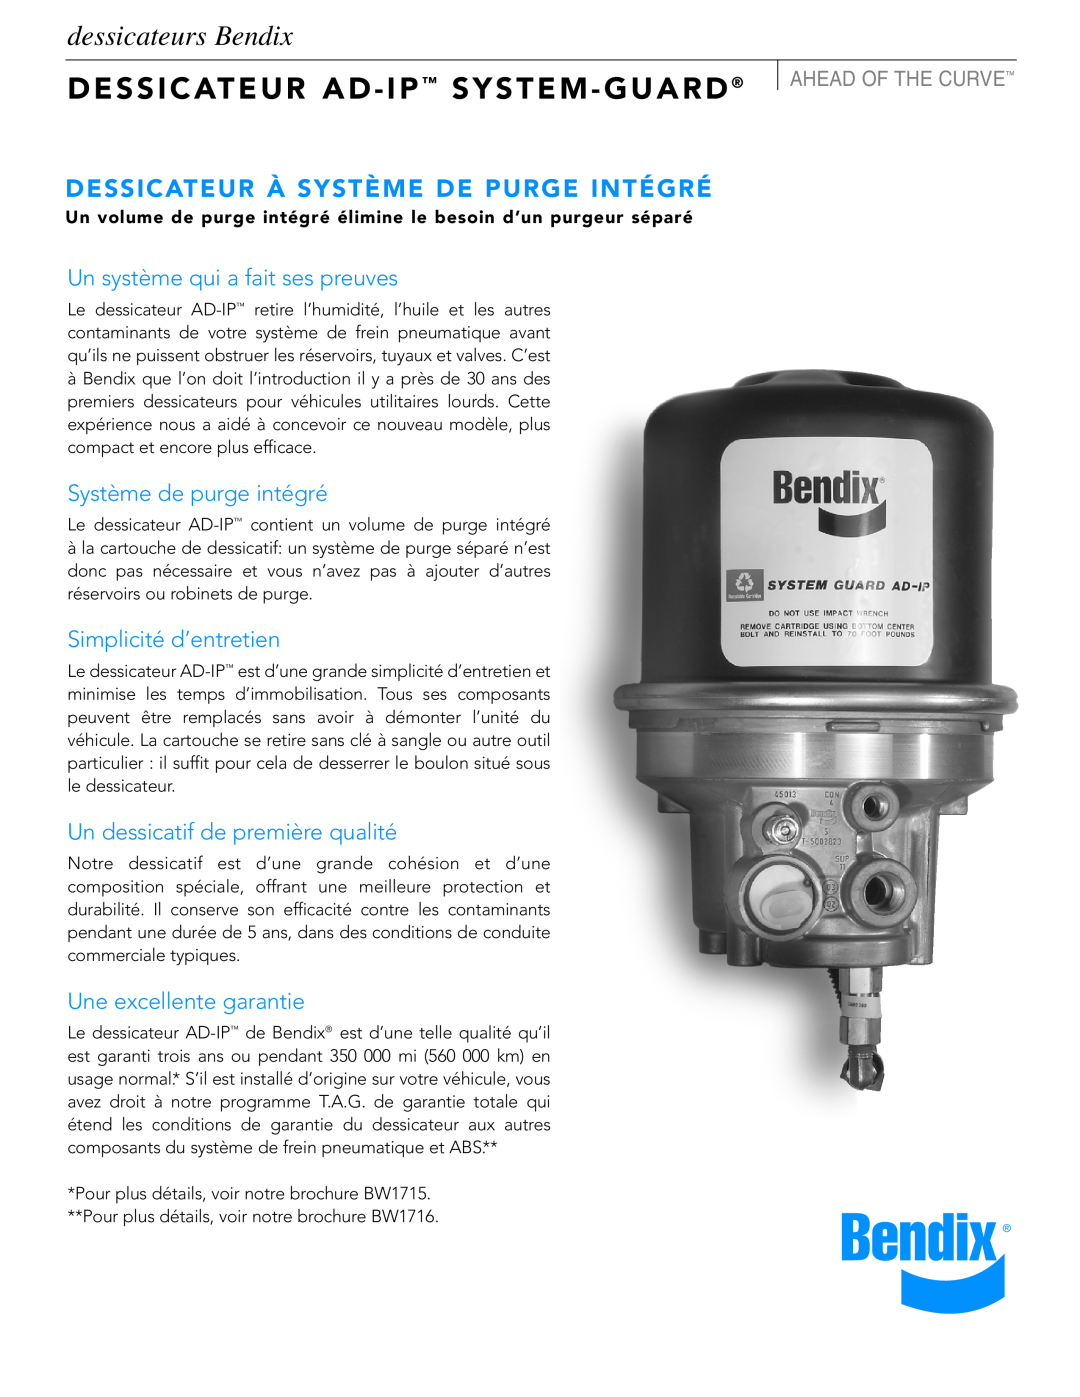 BENDIX BW2023F manual Dessicateur Ad - Ip System - Guard, dessicateurs Bendix, Un système qui a fait ses preuves 